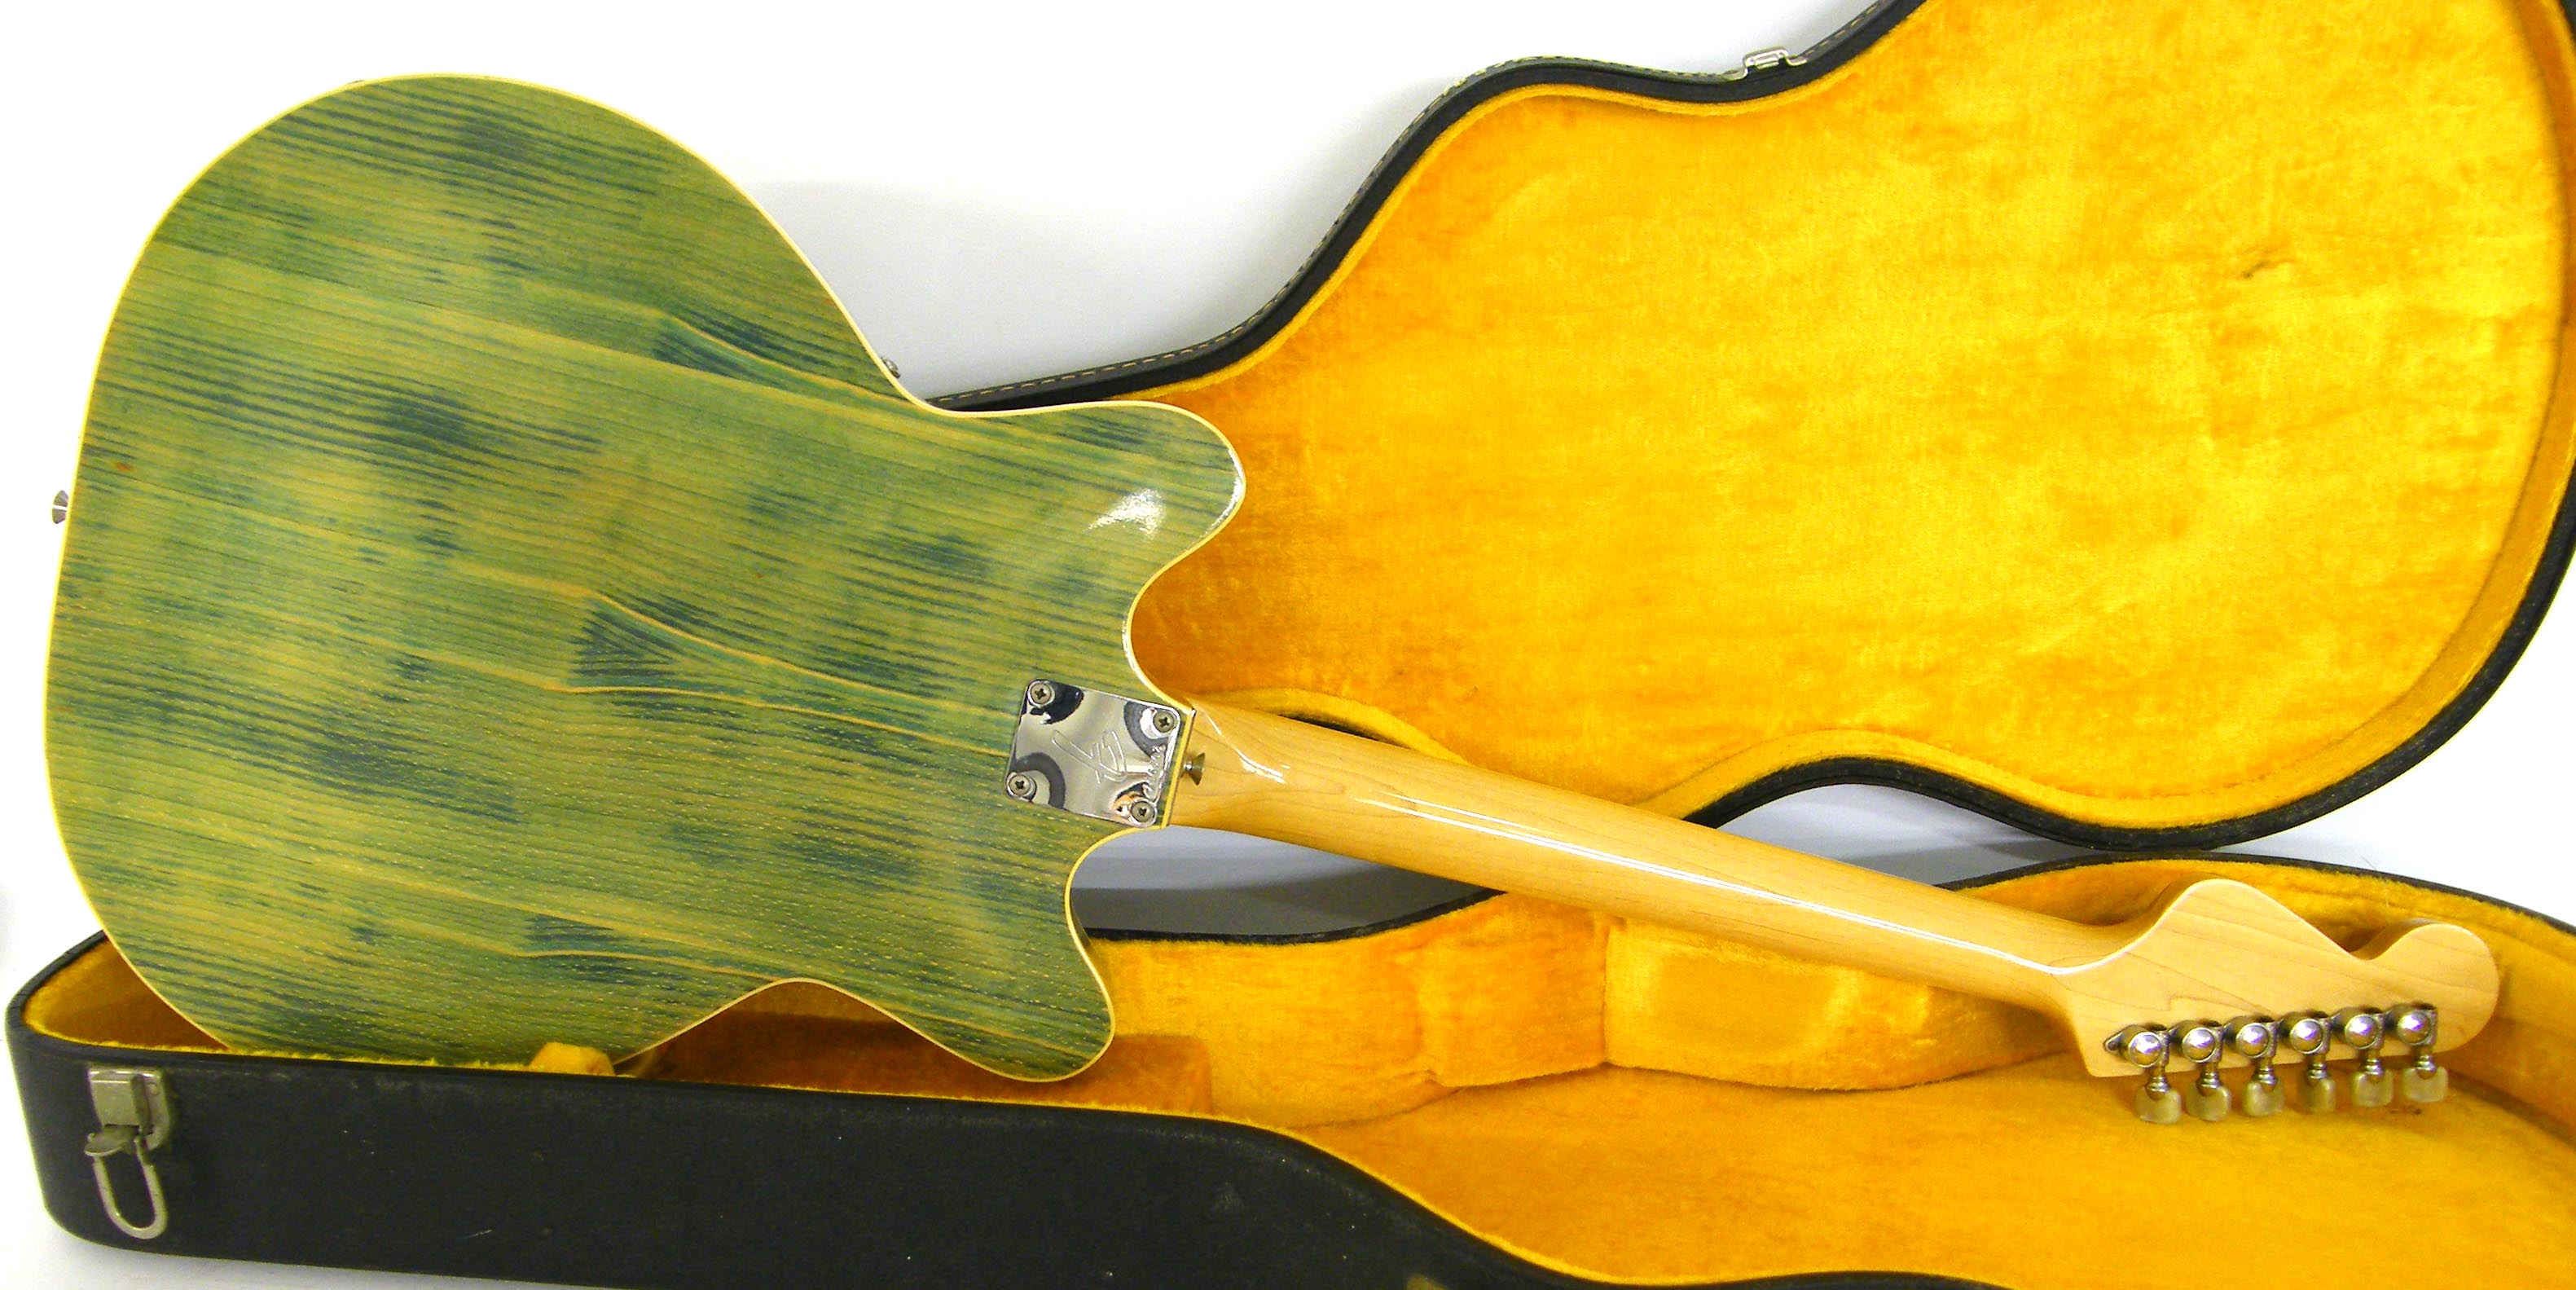 1967 Fender Coronado II Wildwood I hollow body electric guitar, made in USA, ser. no. 203957, - Image 2 of 2